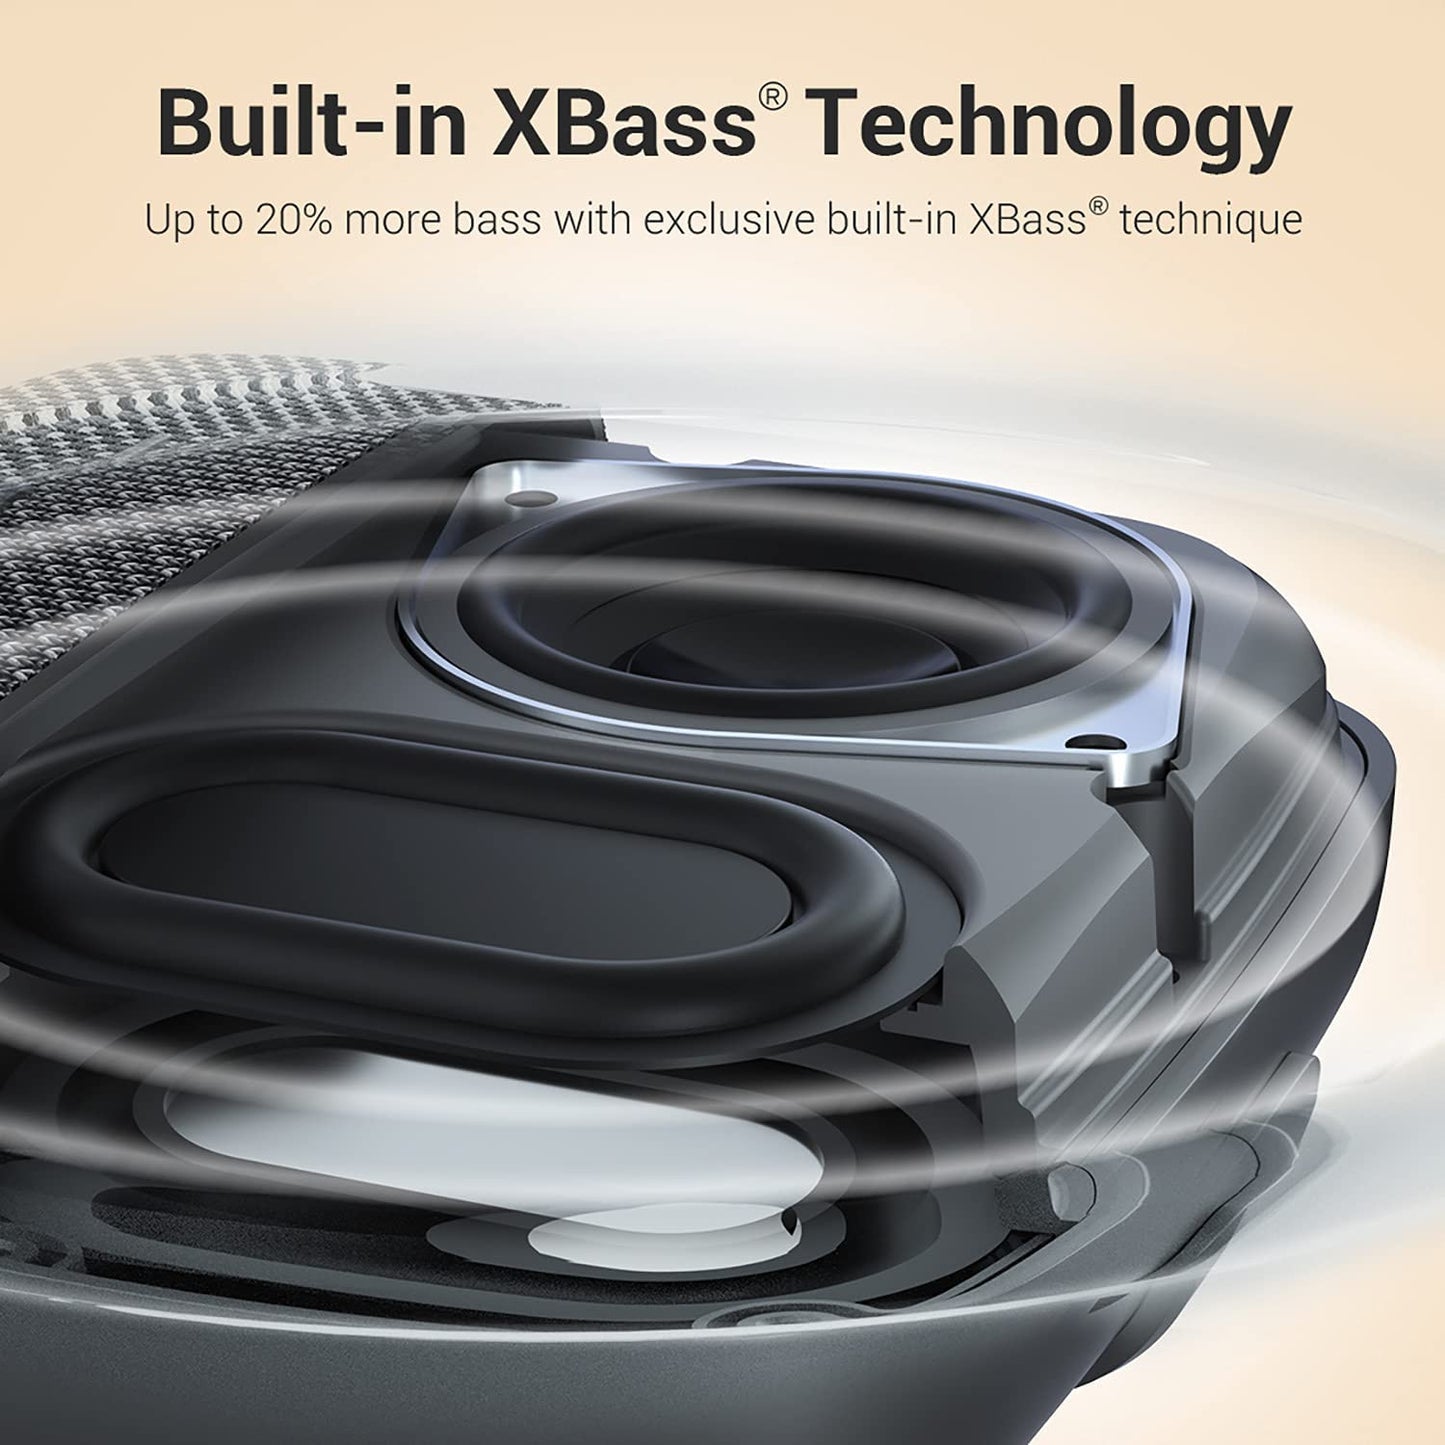 Tribit BTS10 StormBox Micro Portable Wireless Bluetooth 5.0 Speaker 8h Playtime with Strap Extra Bass TWS Stereo Sound IP67 Waterproof Dustproof 100ft Range